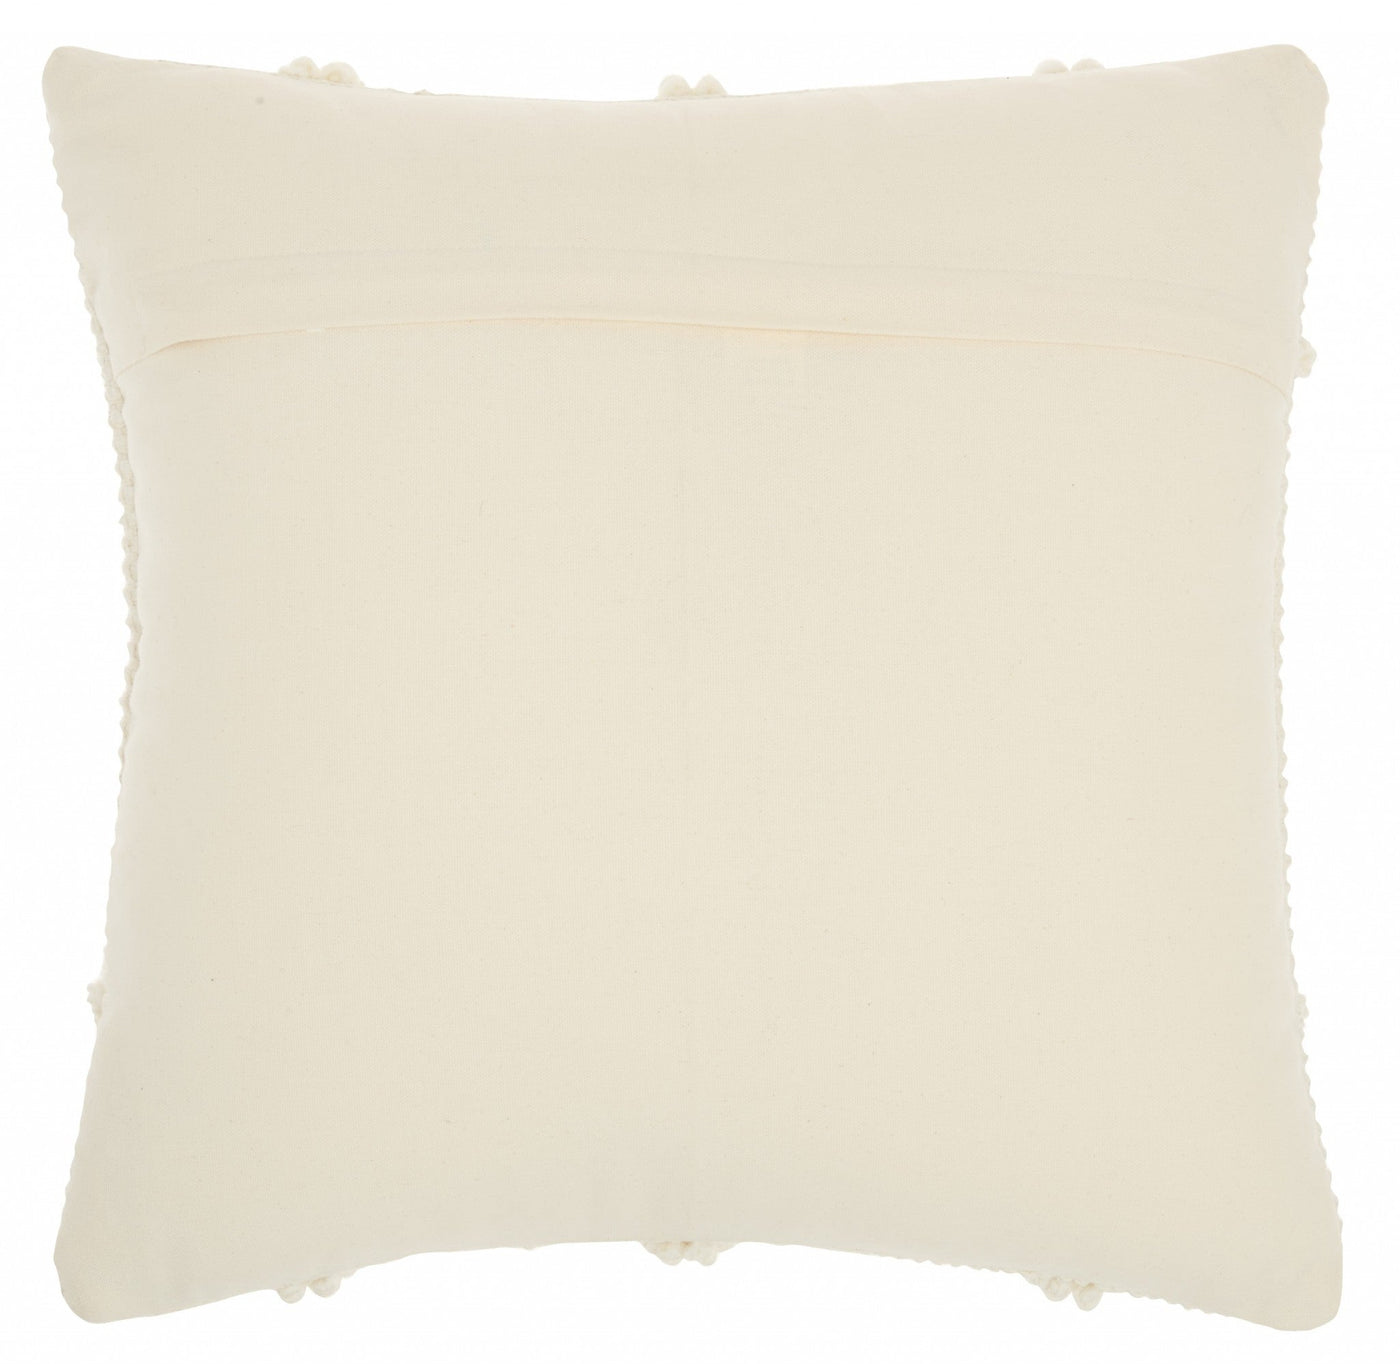 Ivory Textured Lattice Throw Pillow - Accent Throw Pillows